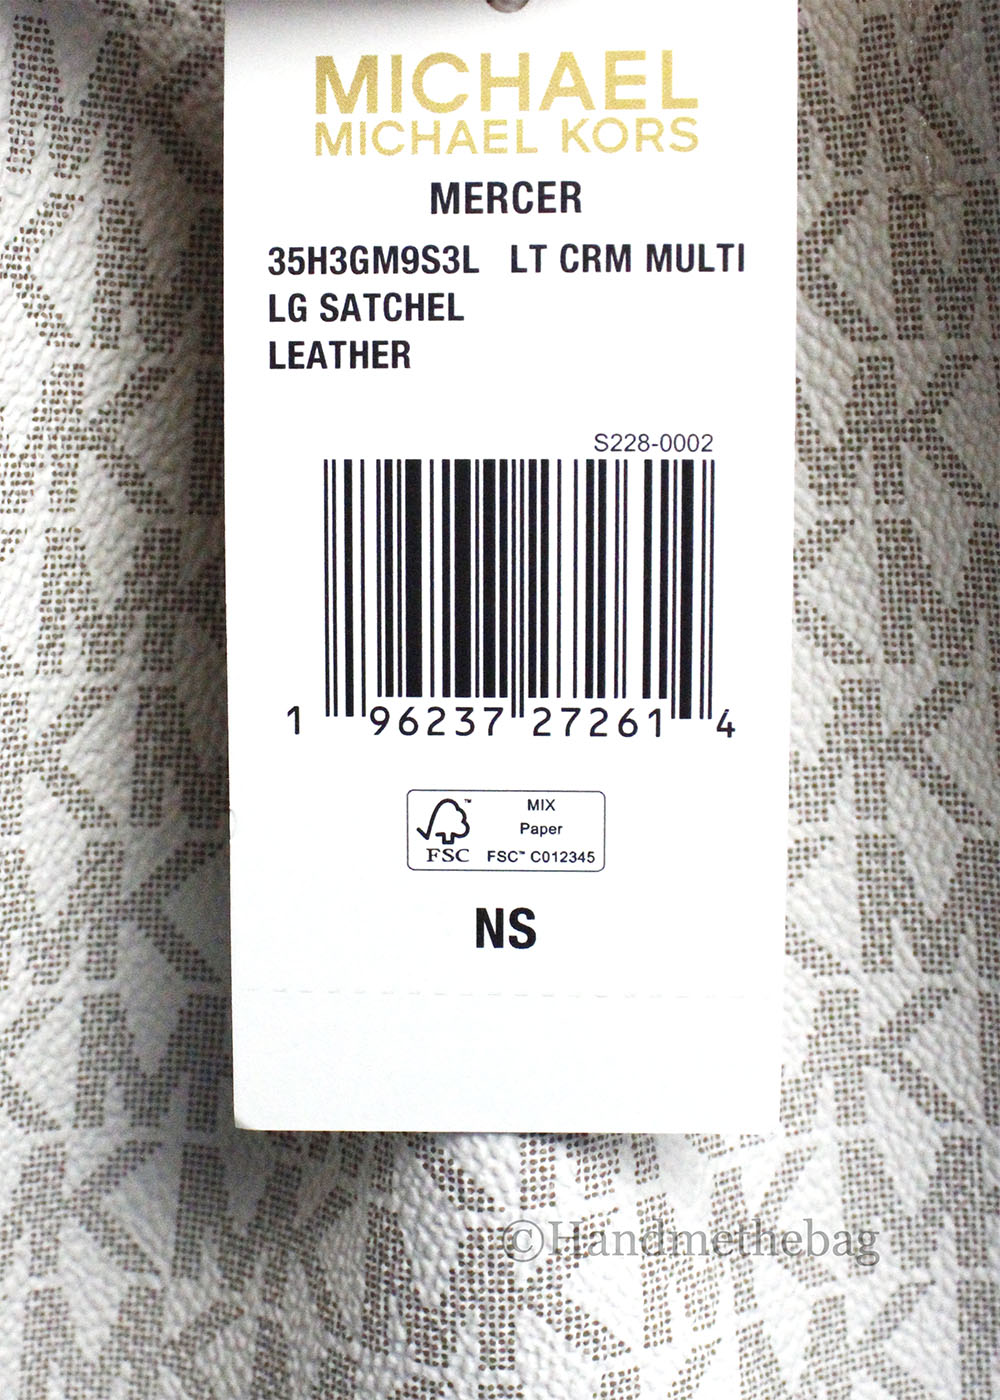 Michael Kors Mercer Large Light Cream Leather PVC Satchel